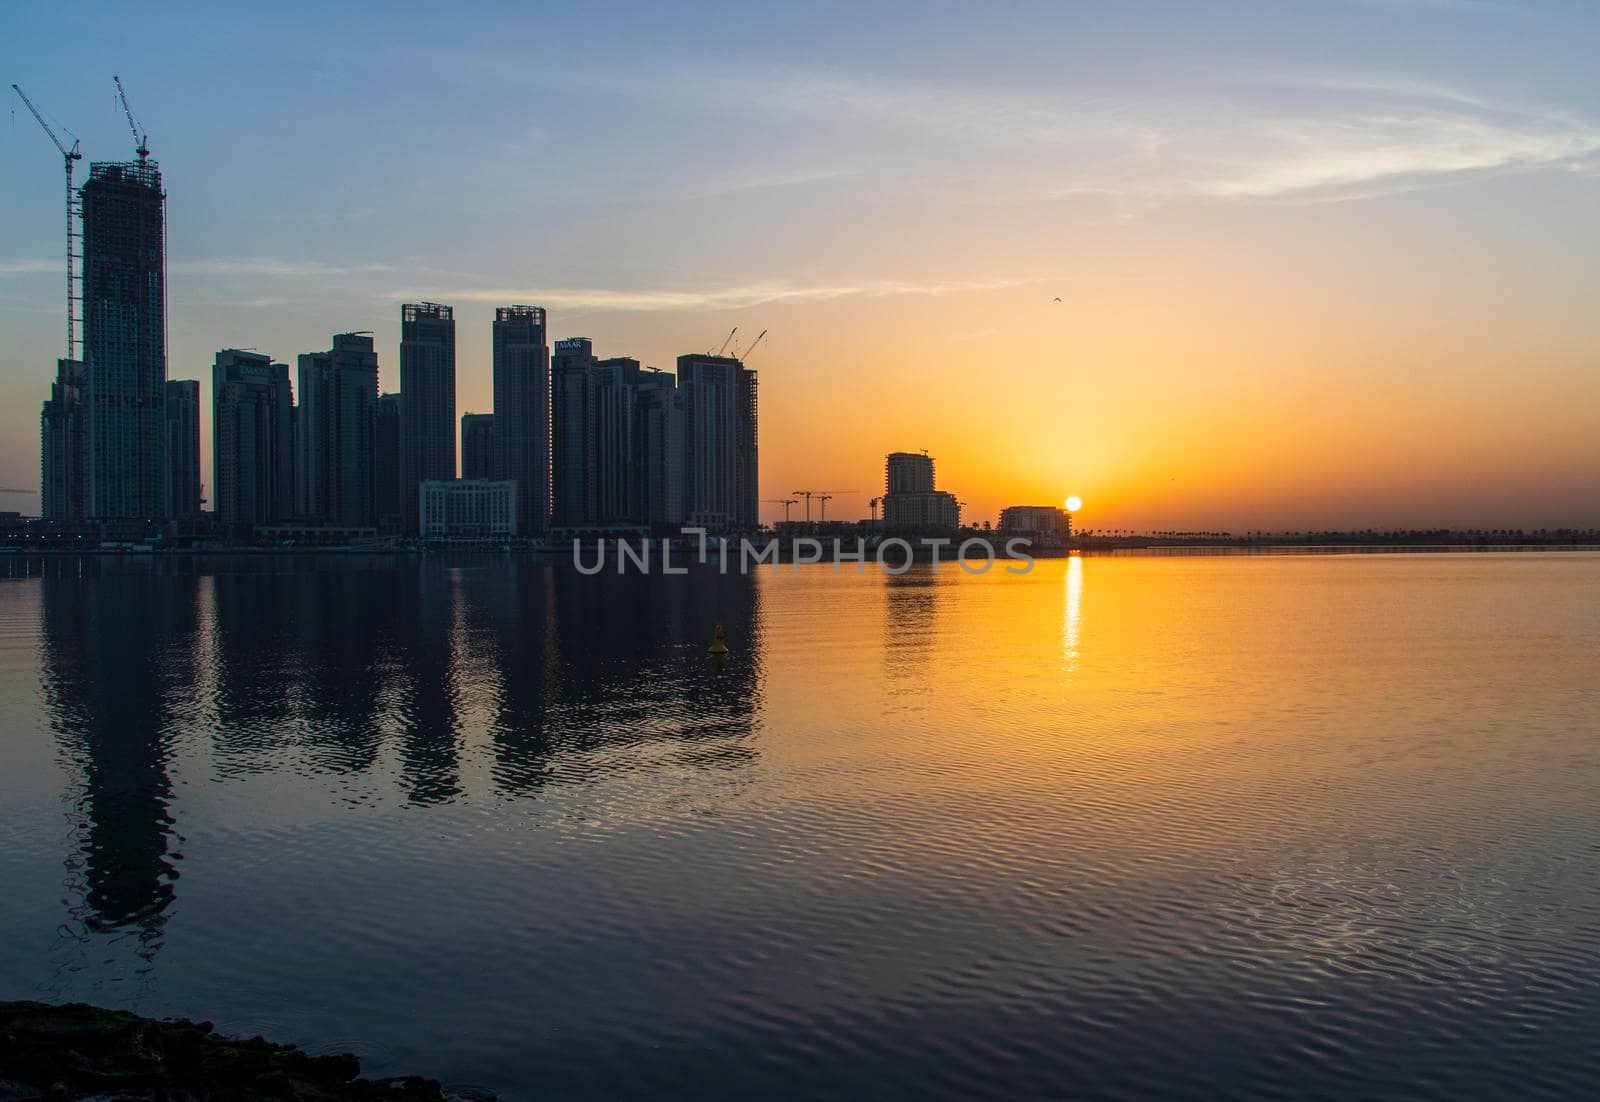 Dubai, UAE - 01.29.2021 Sunrise over Dubai city skyline. Creek Harbor by EMAAR